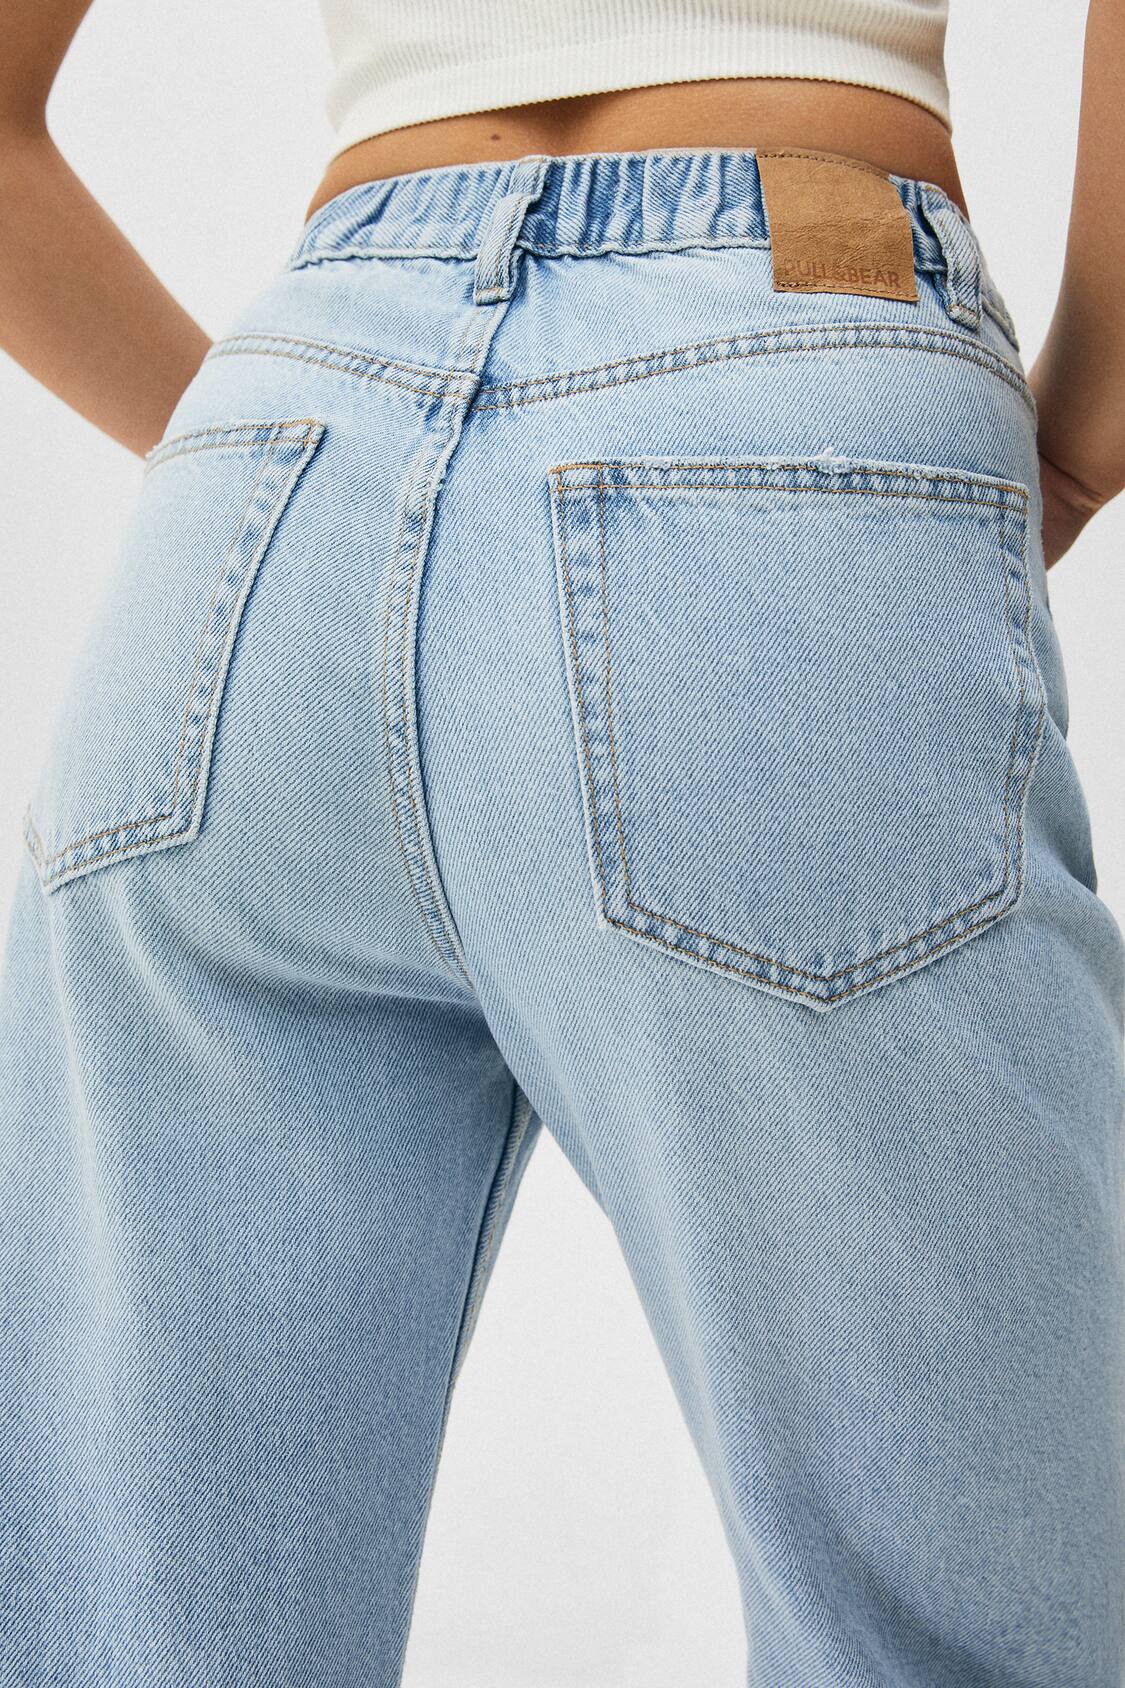 Jeans tiro alto goma cintura -